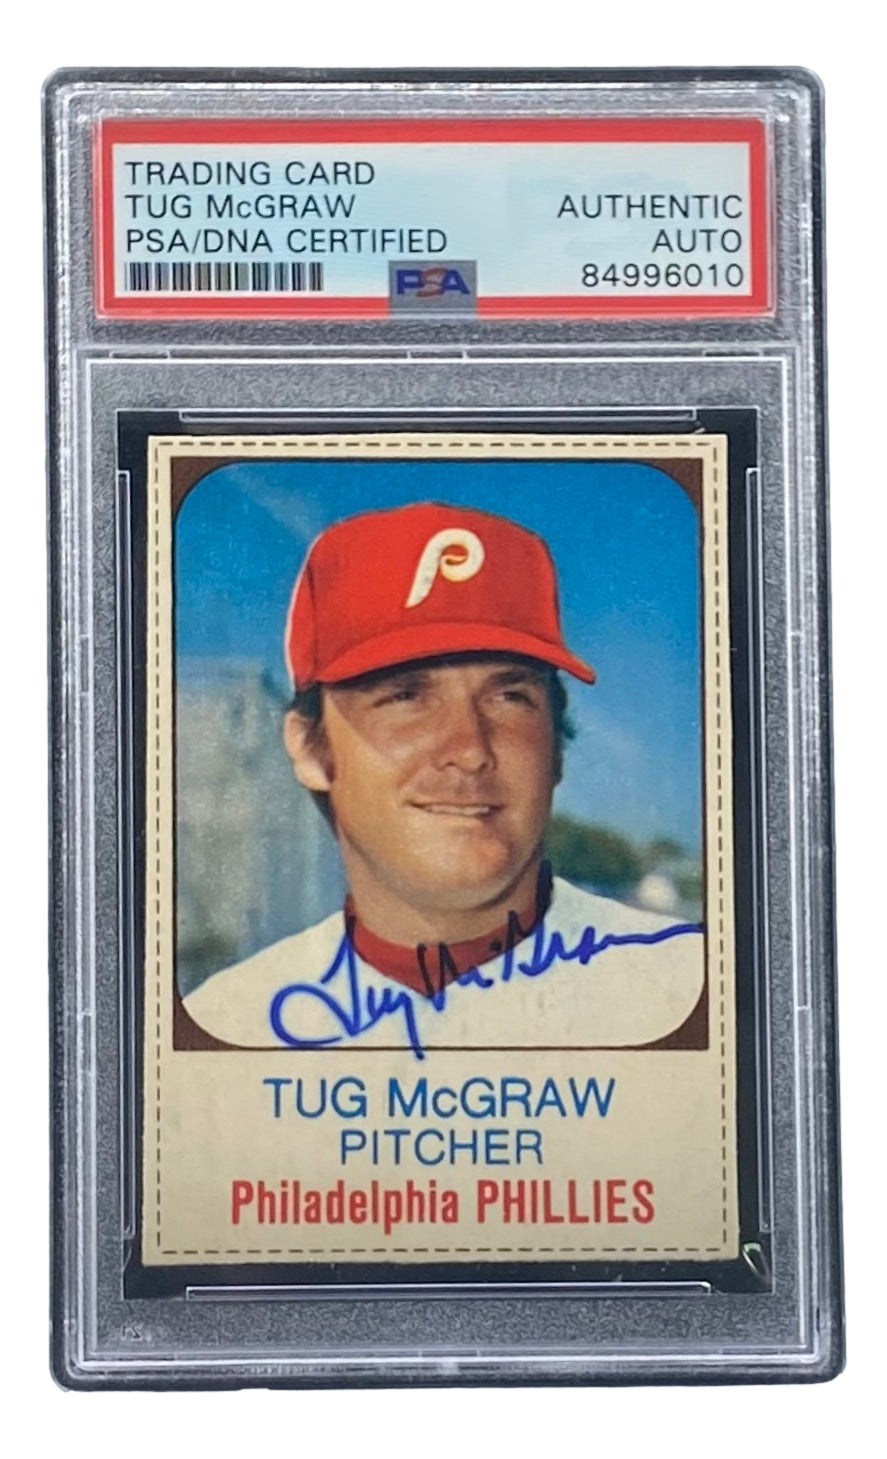 Tug McGraw autographed baseball card (Philadelphia Phillies